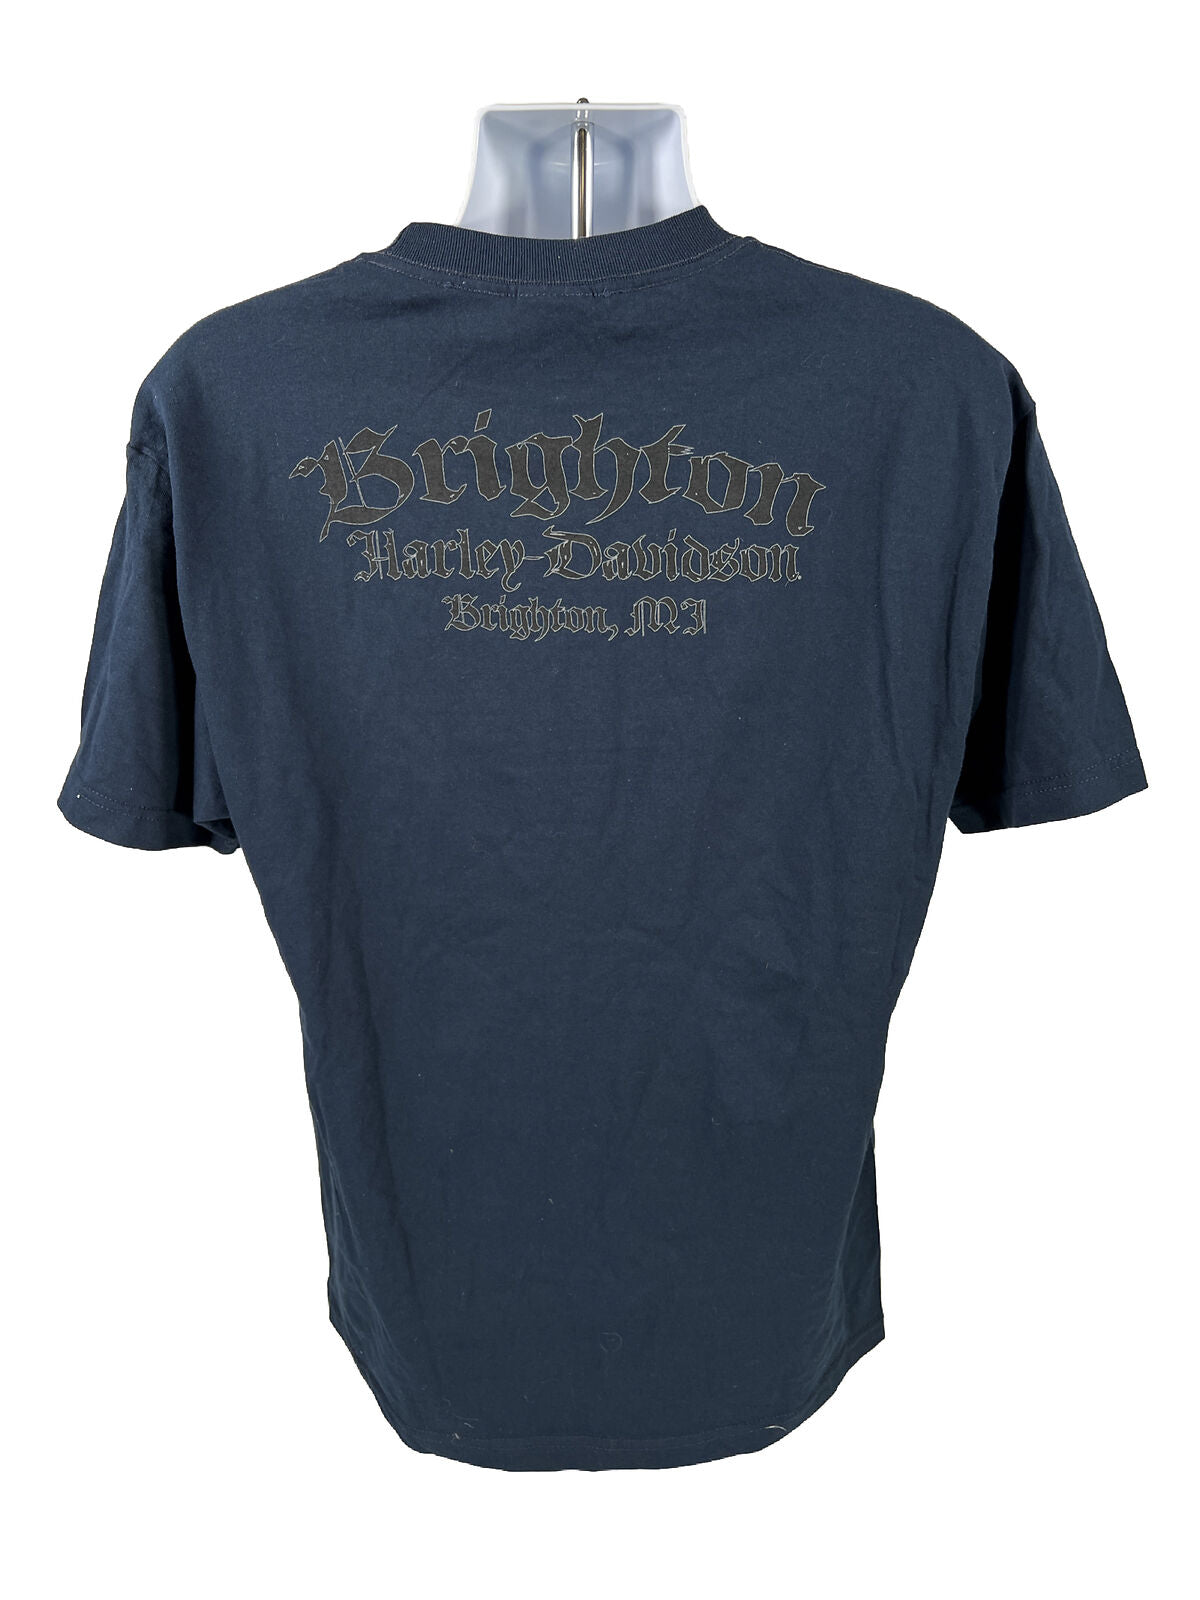 Harley Davidson Men's Navy Blue Graphic Short Sleeve T-Shirt - L